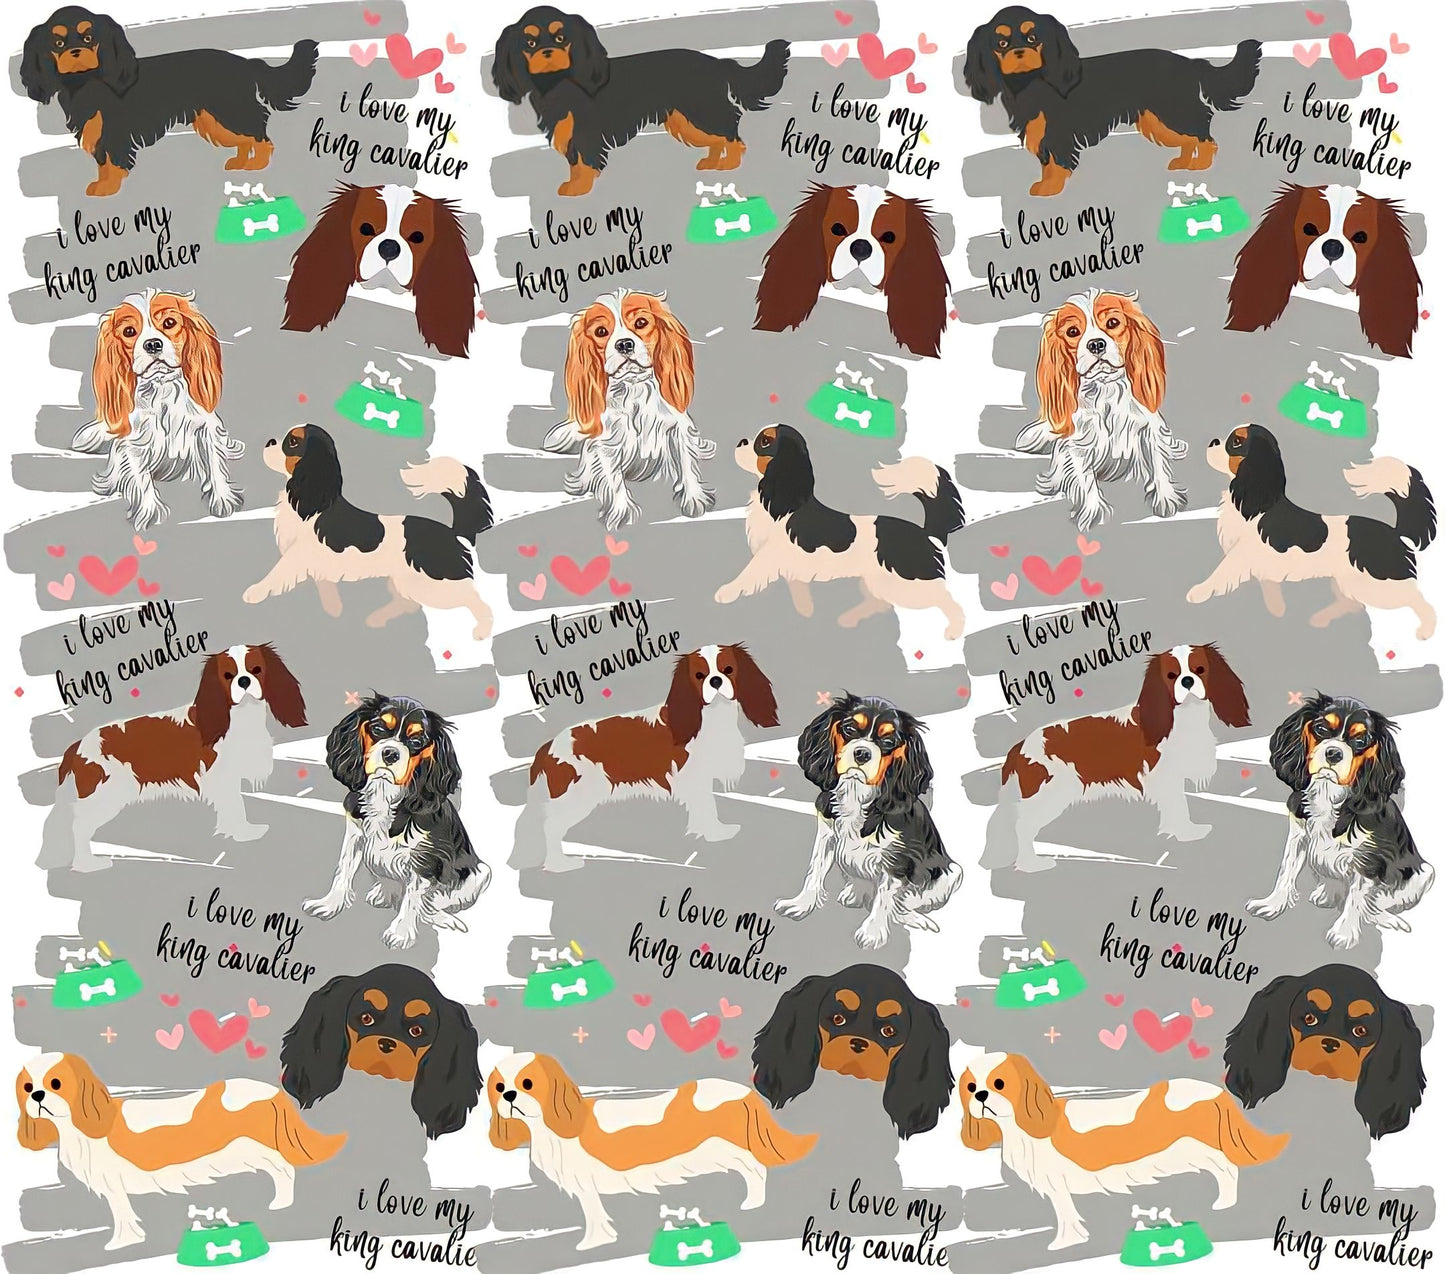 Cavalier Appreciation - Cartoon - "I Love My King Cavalier" - Assorted Colored Dogs w/ Grey Background - 20 Oz Sublimation Transfer